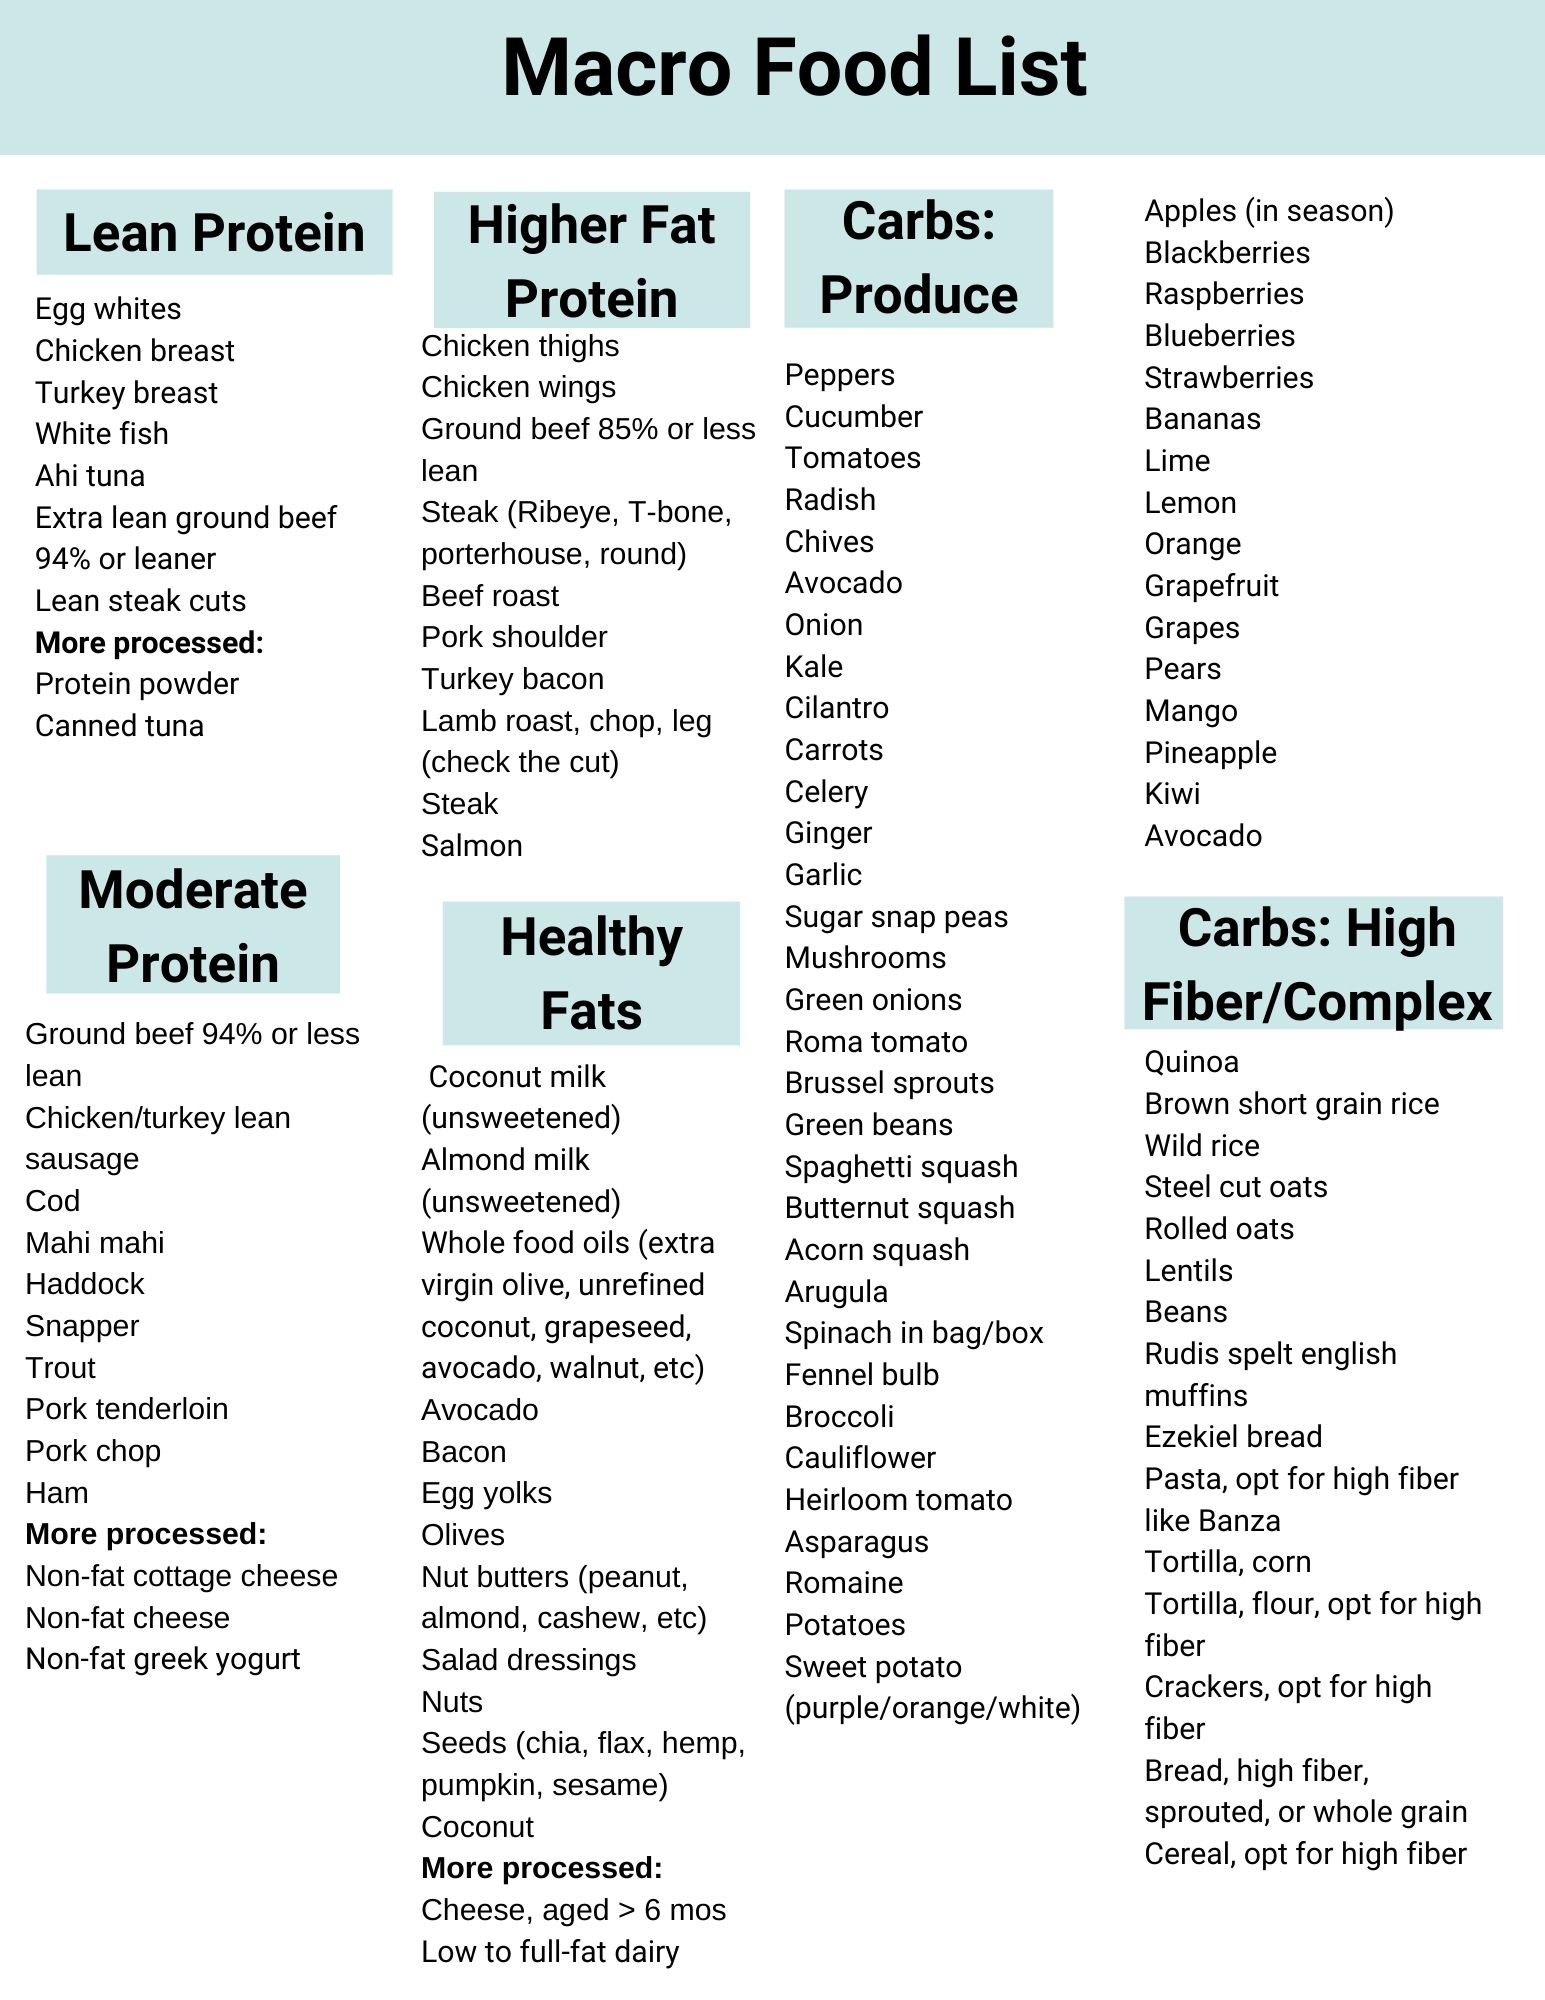 Macro Food List for Meal Prep | The Body Bulletin